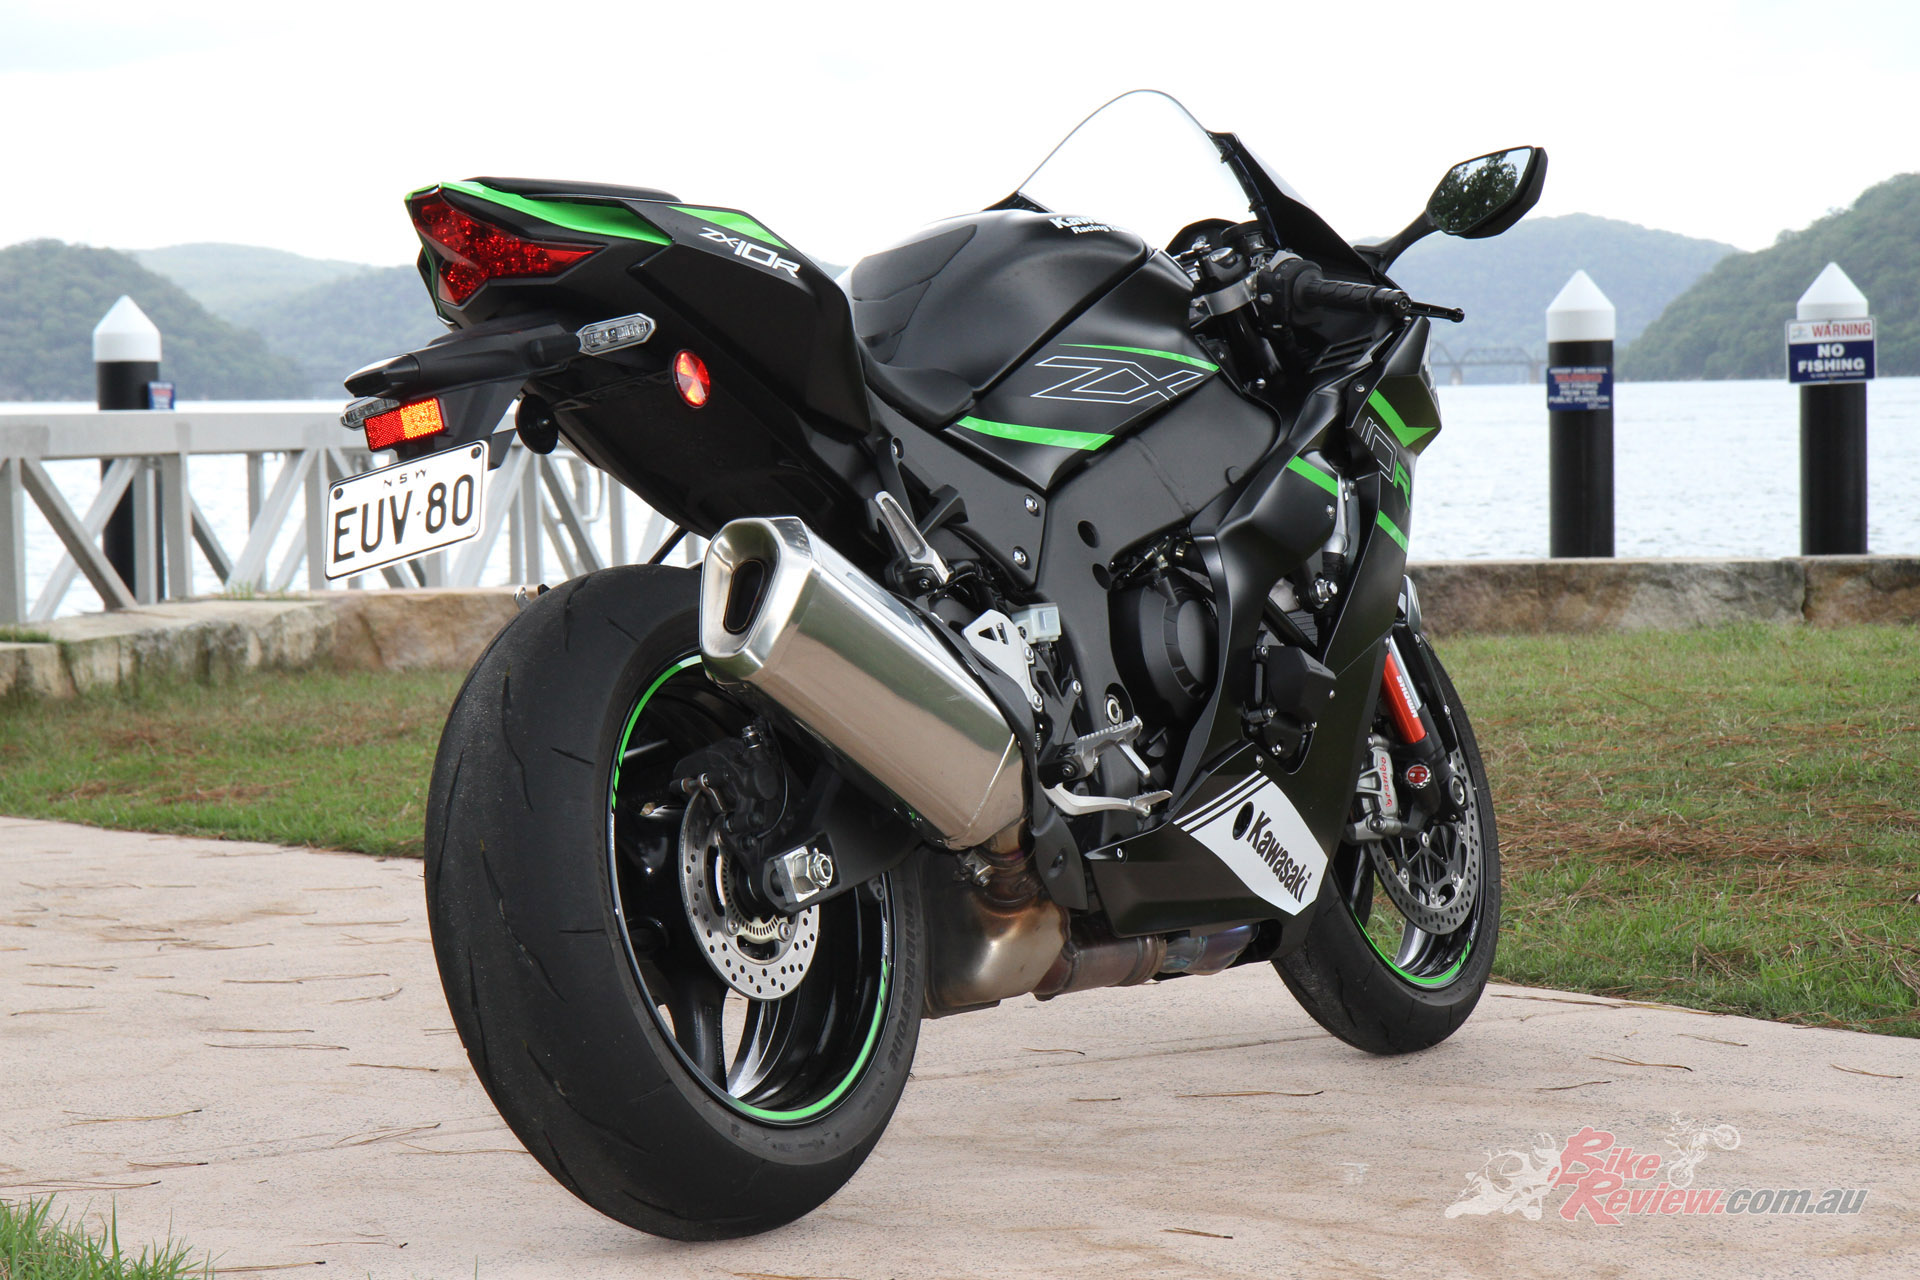 Review: 2021 Ninja ZX-10R Superbike - Bike